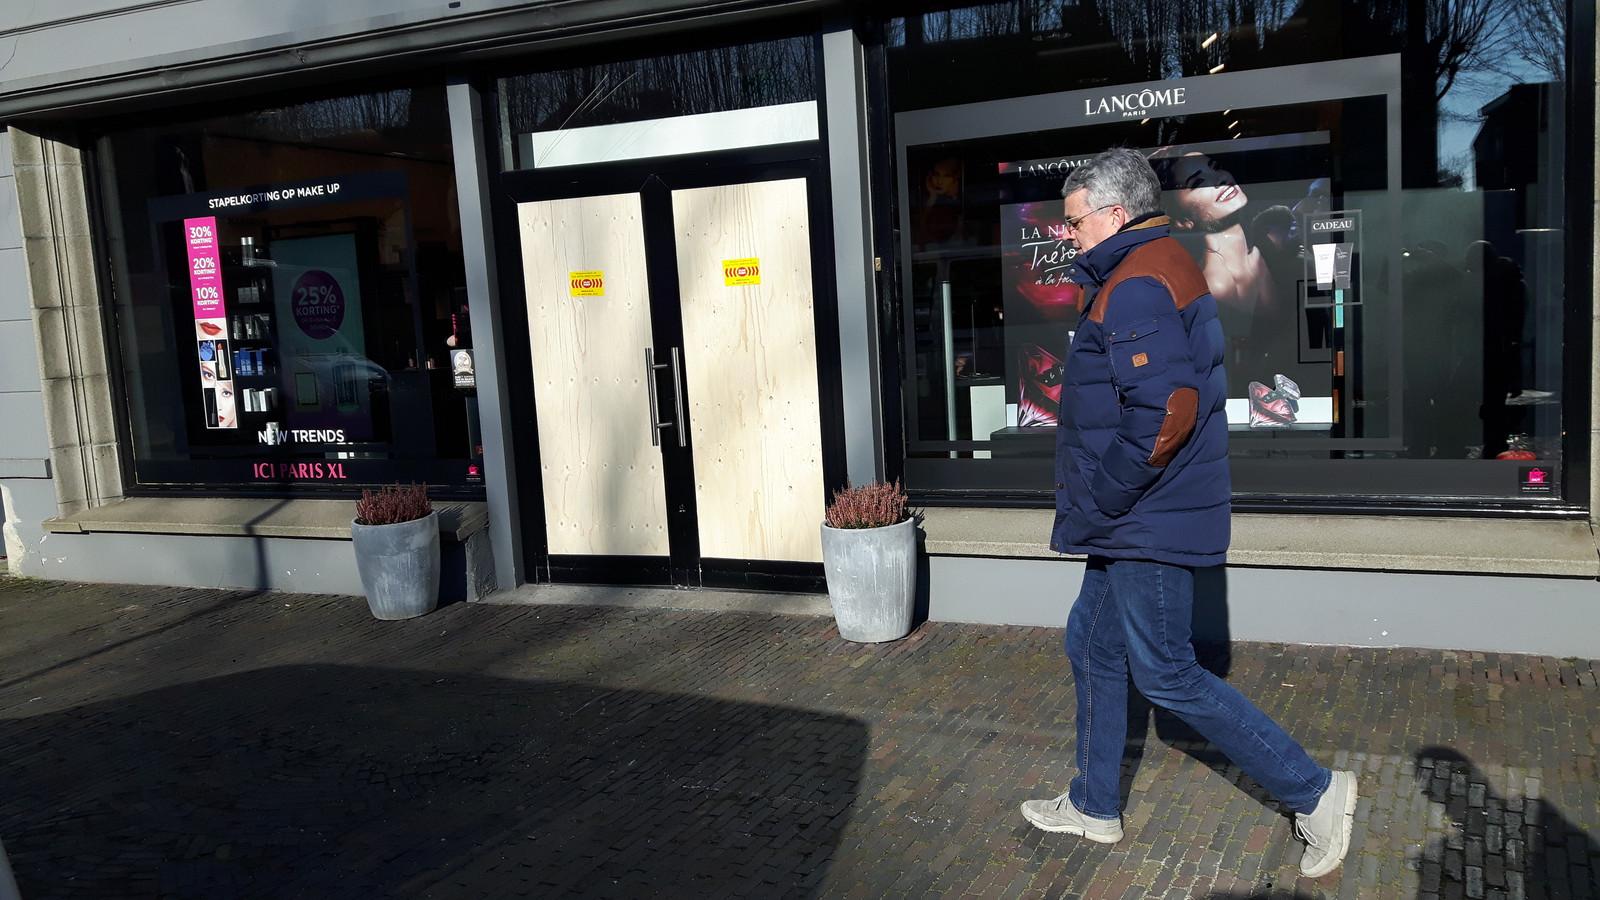 kever as tellen Puinruimen bij ICI Paris XL Oisterwijk na ramkraak, daders spoorloos | Foto  | bd.nl